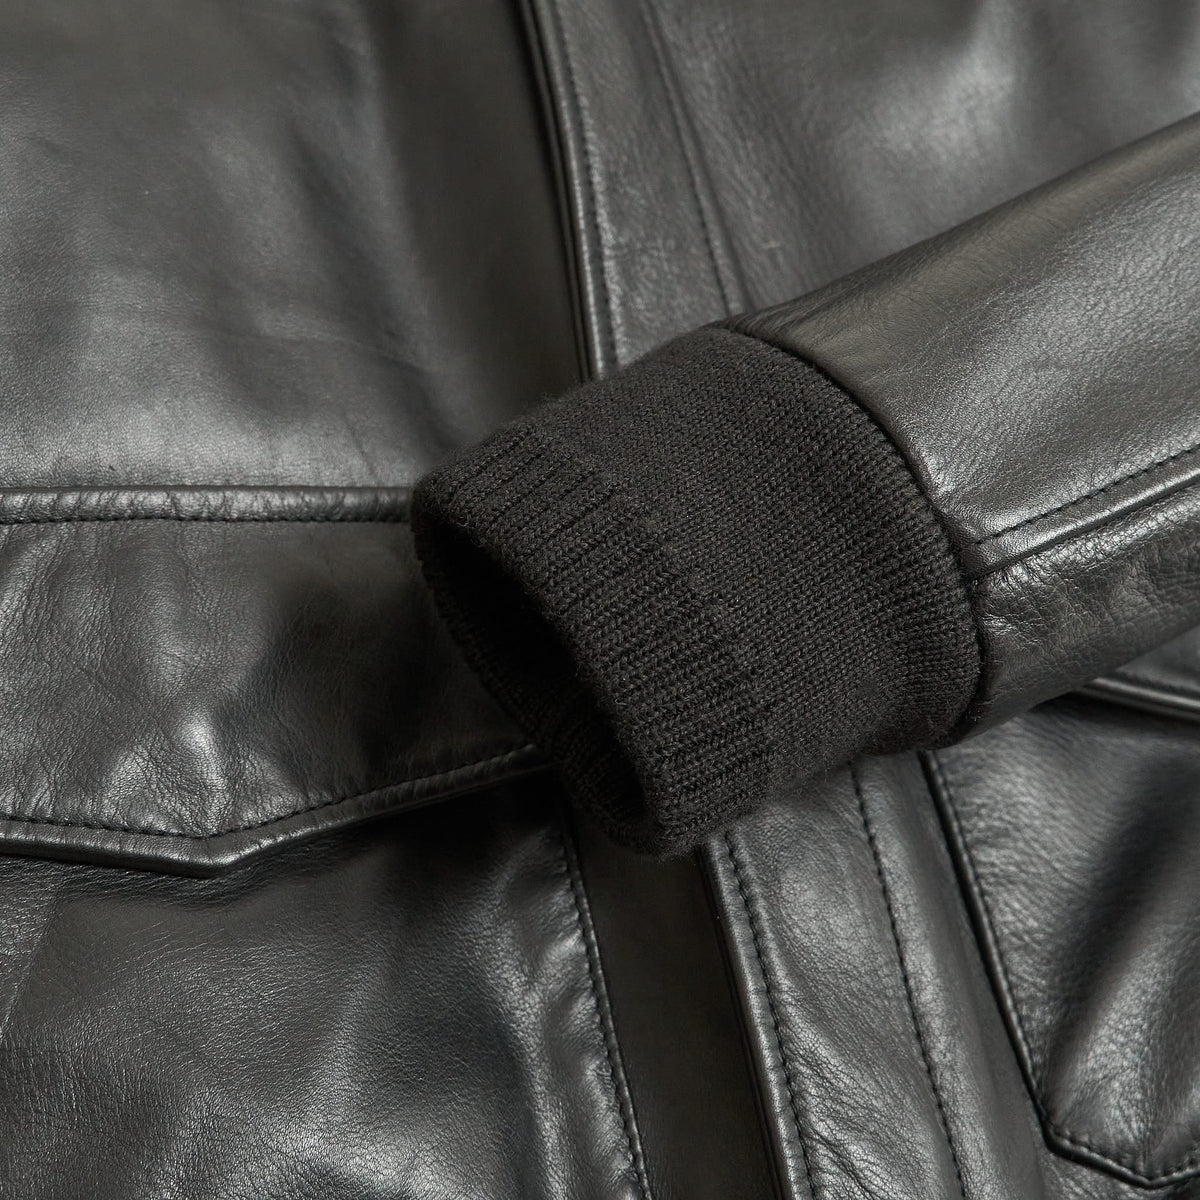 DeeCee style A2 Horshide Leather Jacket